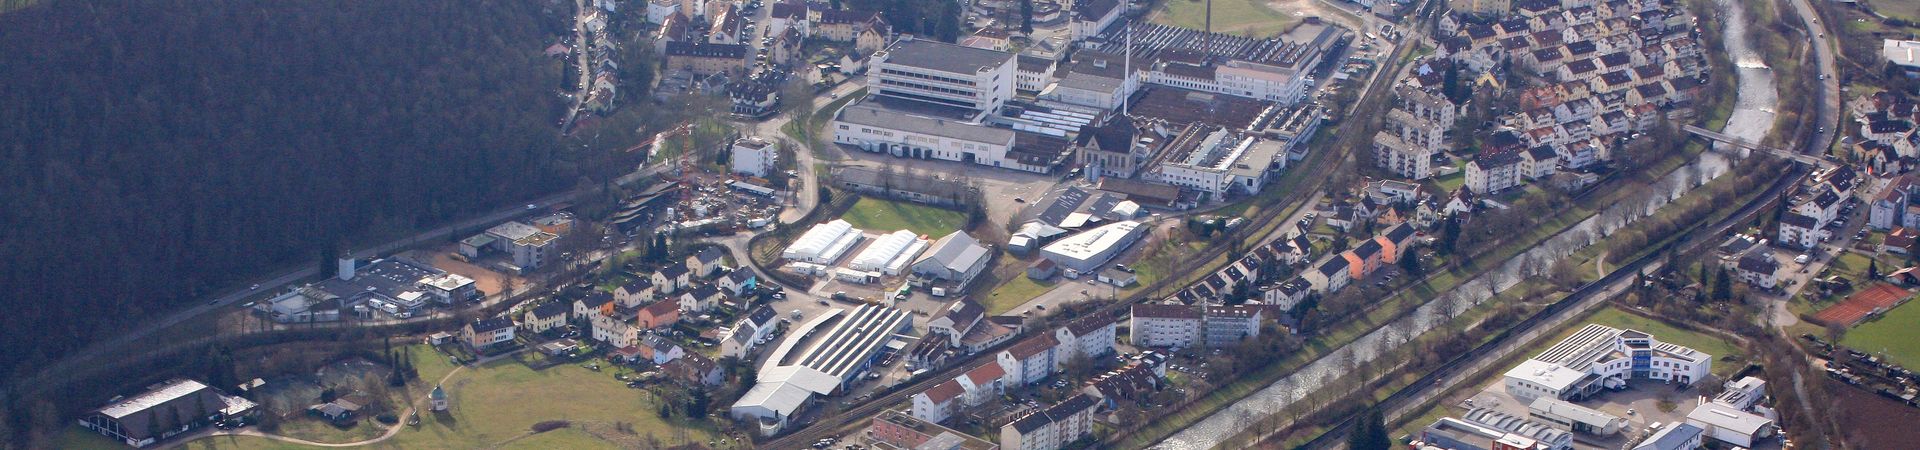 Luftbild aktuell Entenbad mit Lauffenmühle-Areal